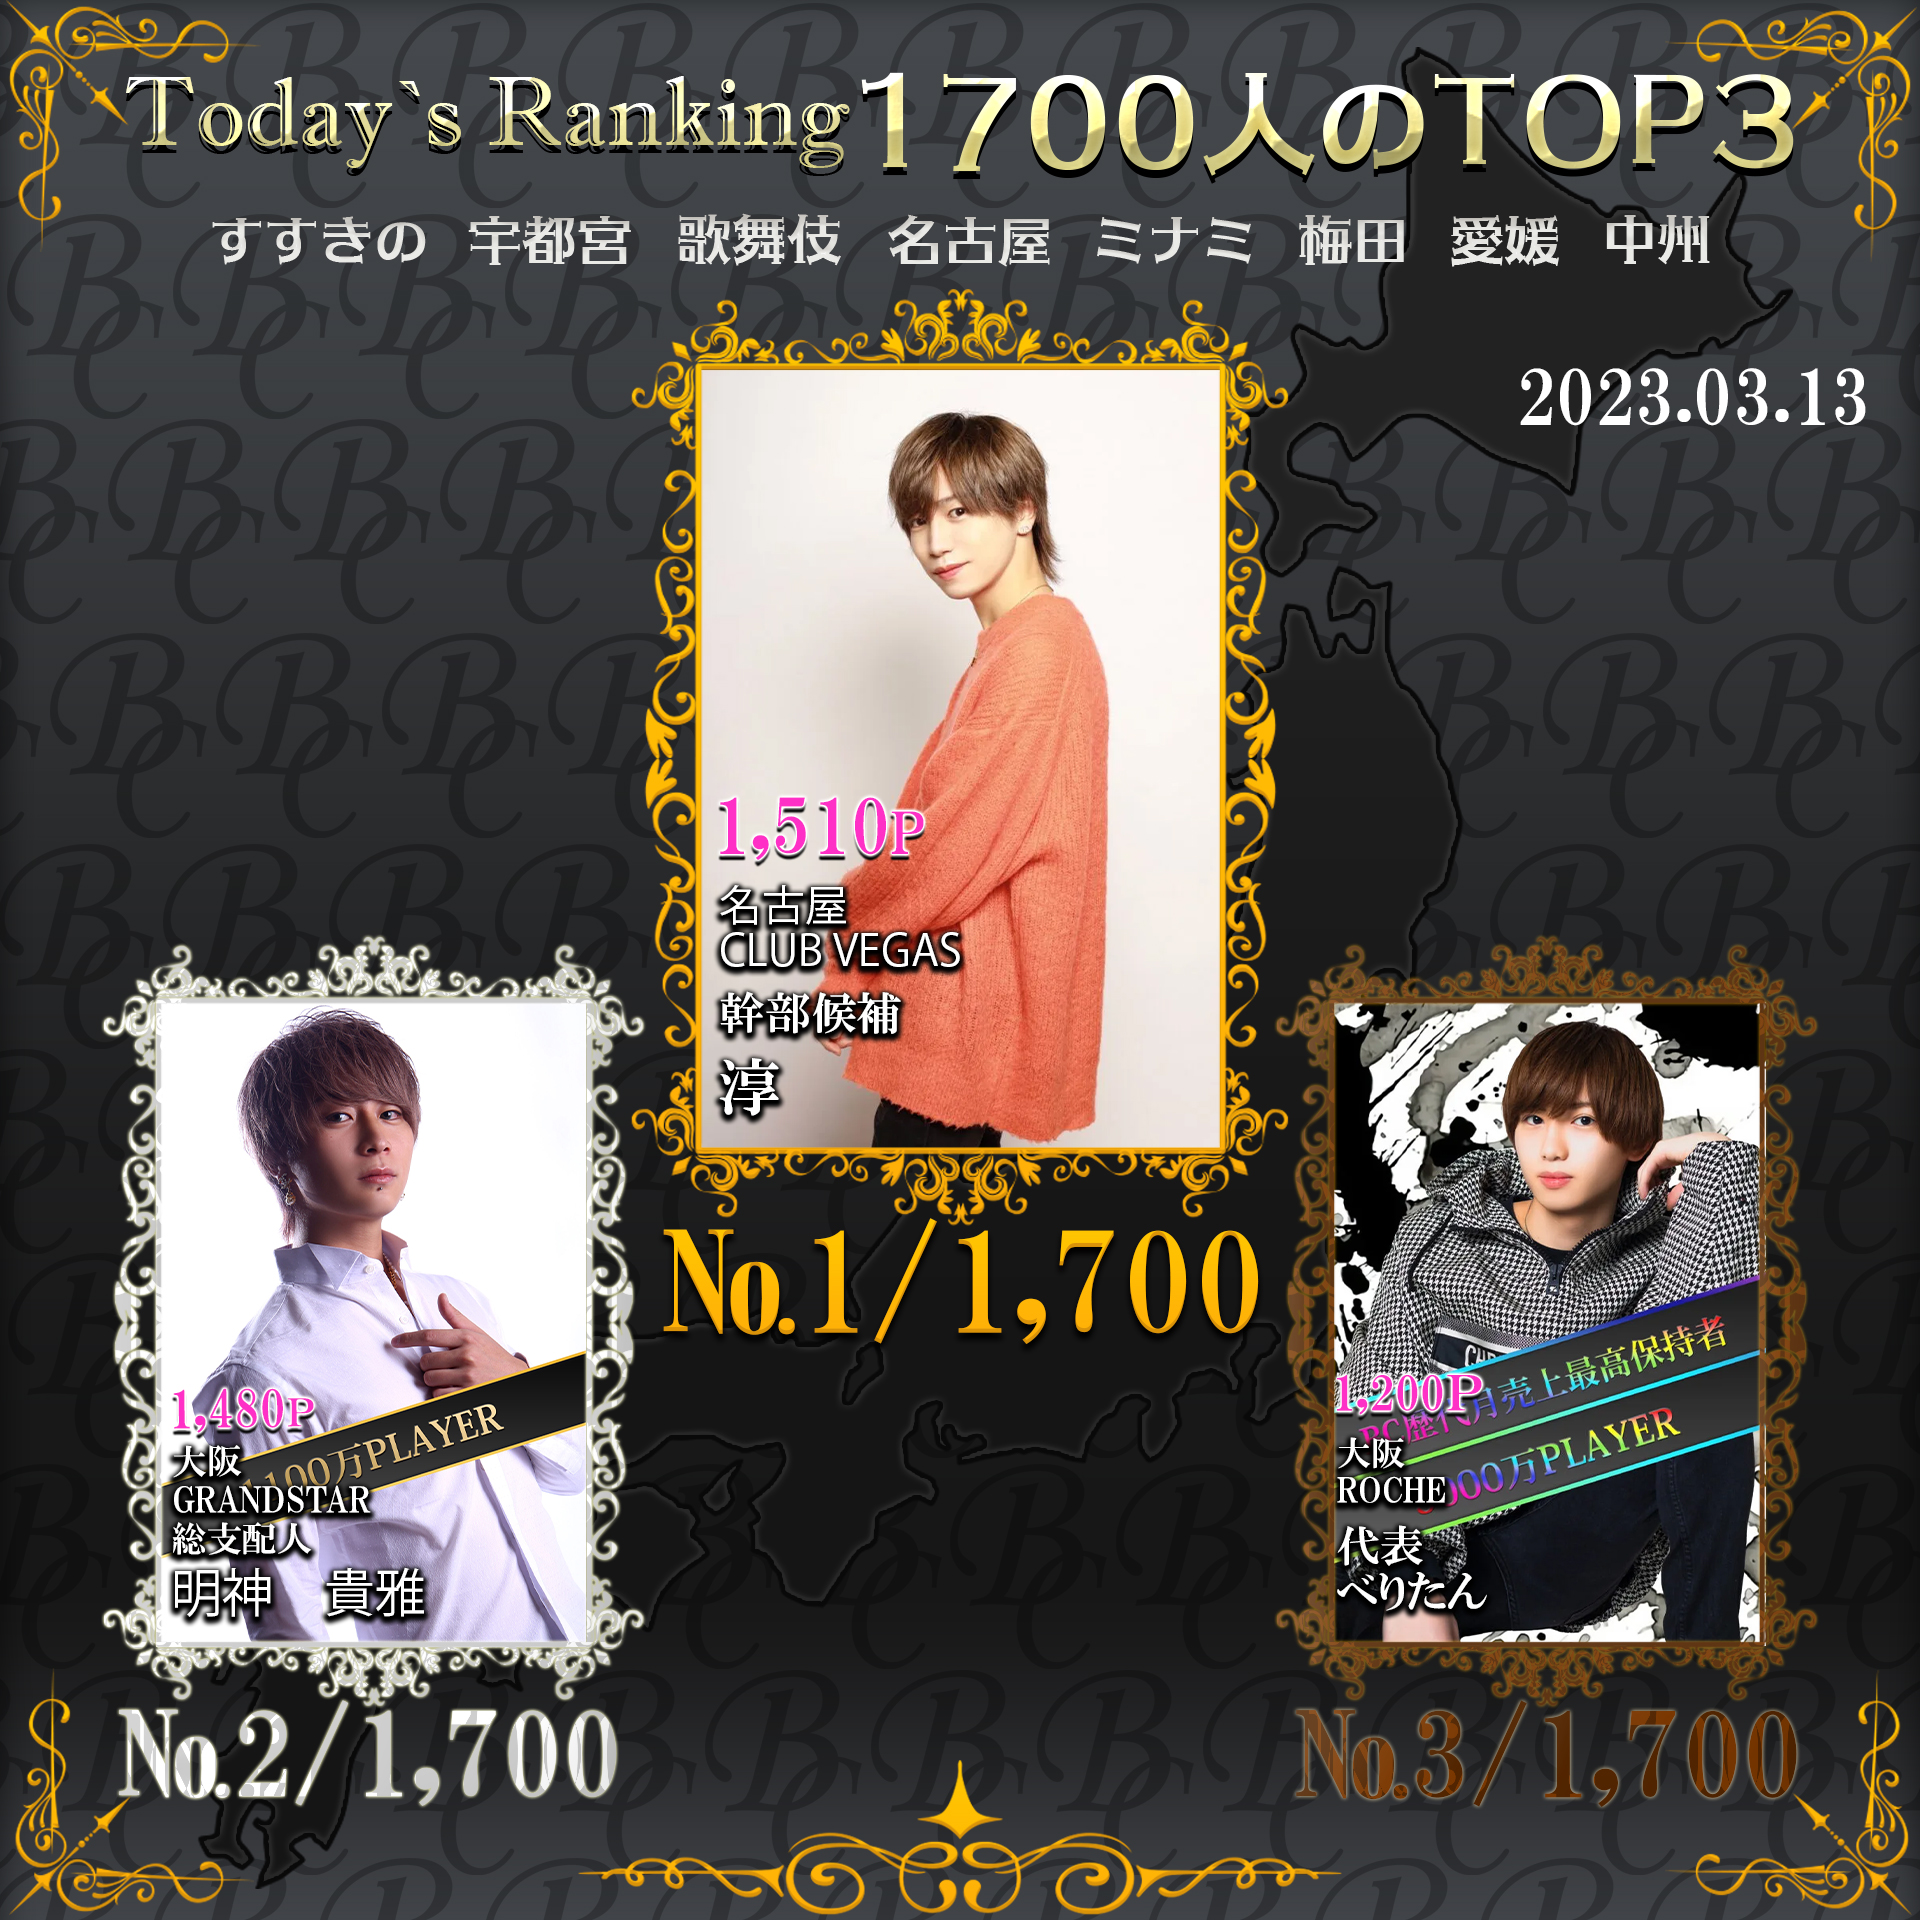 3/13 Today‘s Ranking